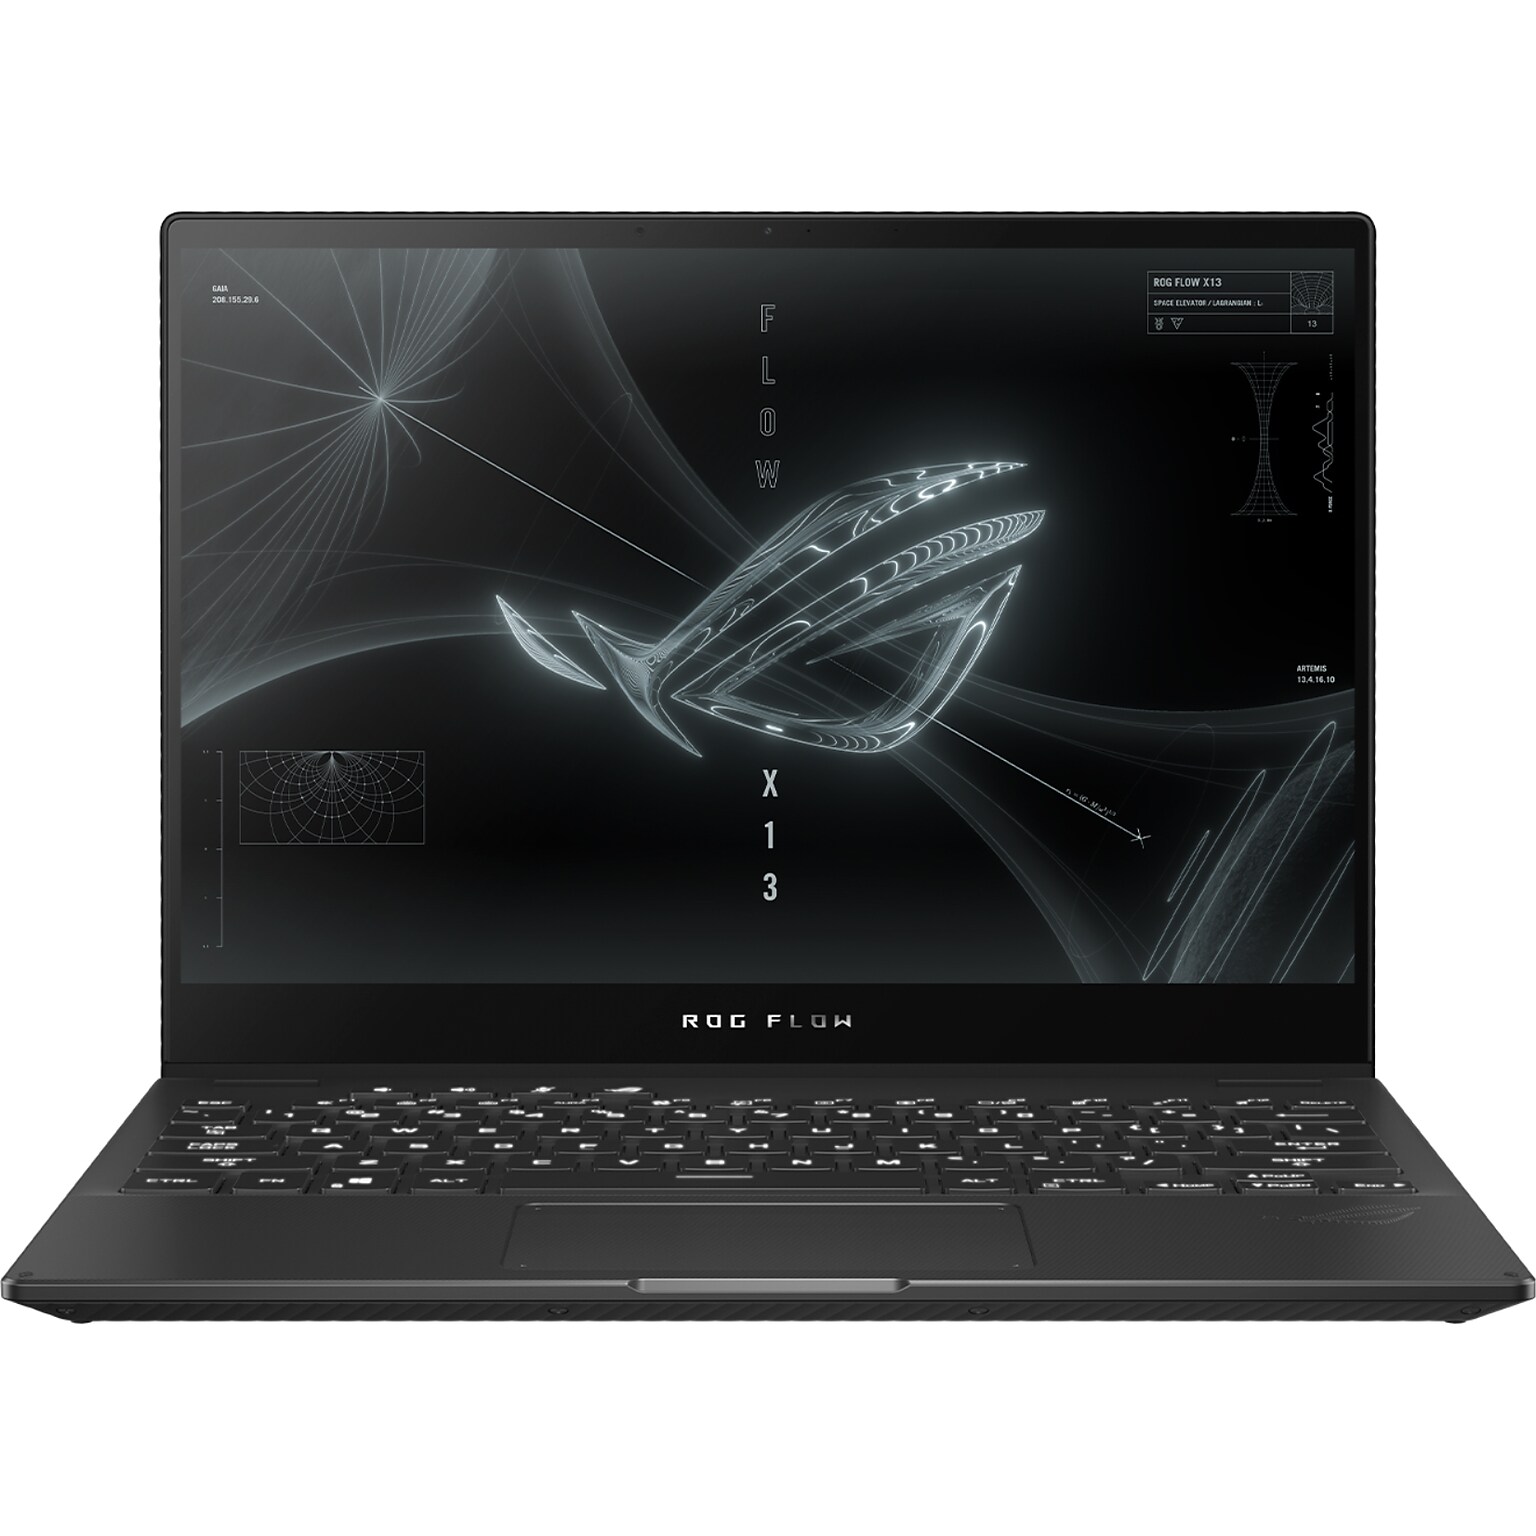 Asus ROG Flow X13 GV301 13.4 Laptop, AMD Ryzen 9 5980HS, 32GB Memory, 1TB SSD, Windows 10 Pro (GV301QH-XS98-B)